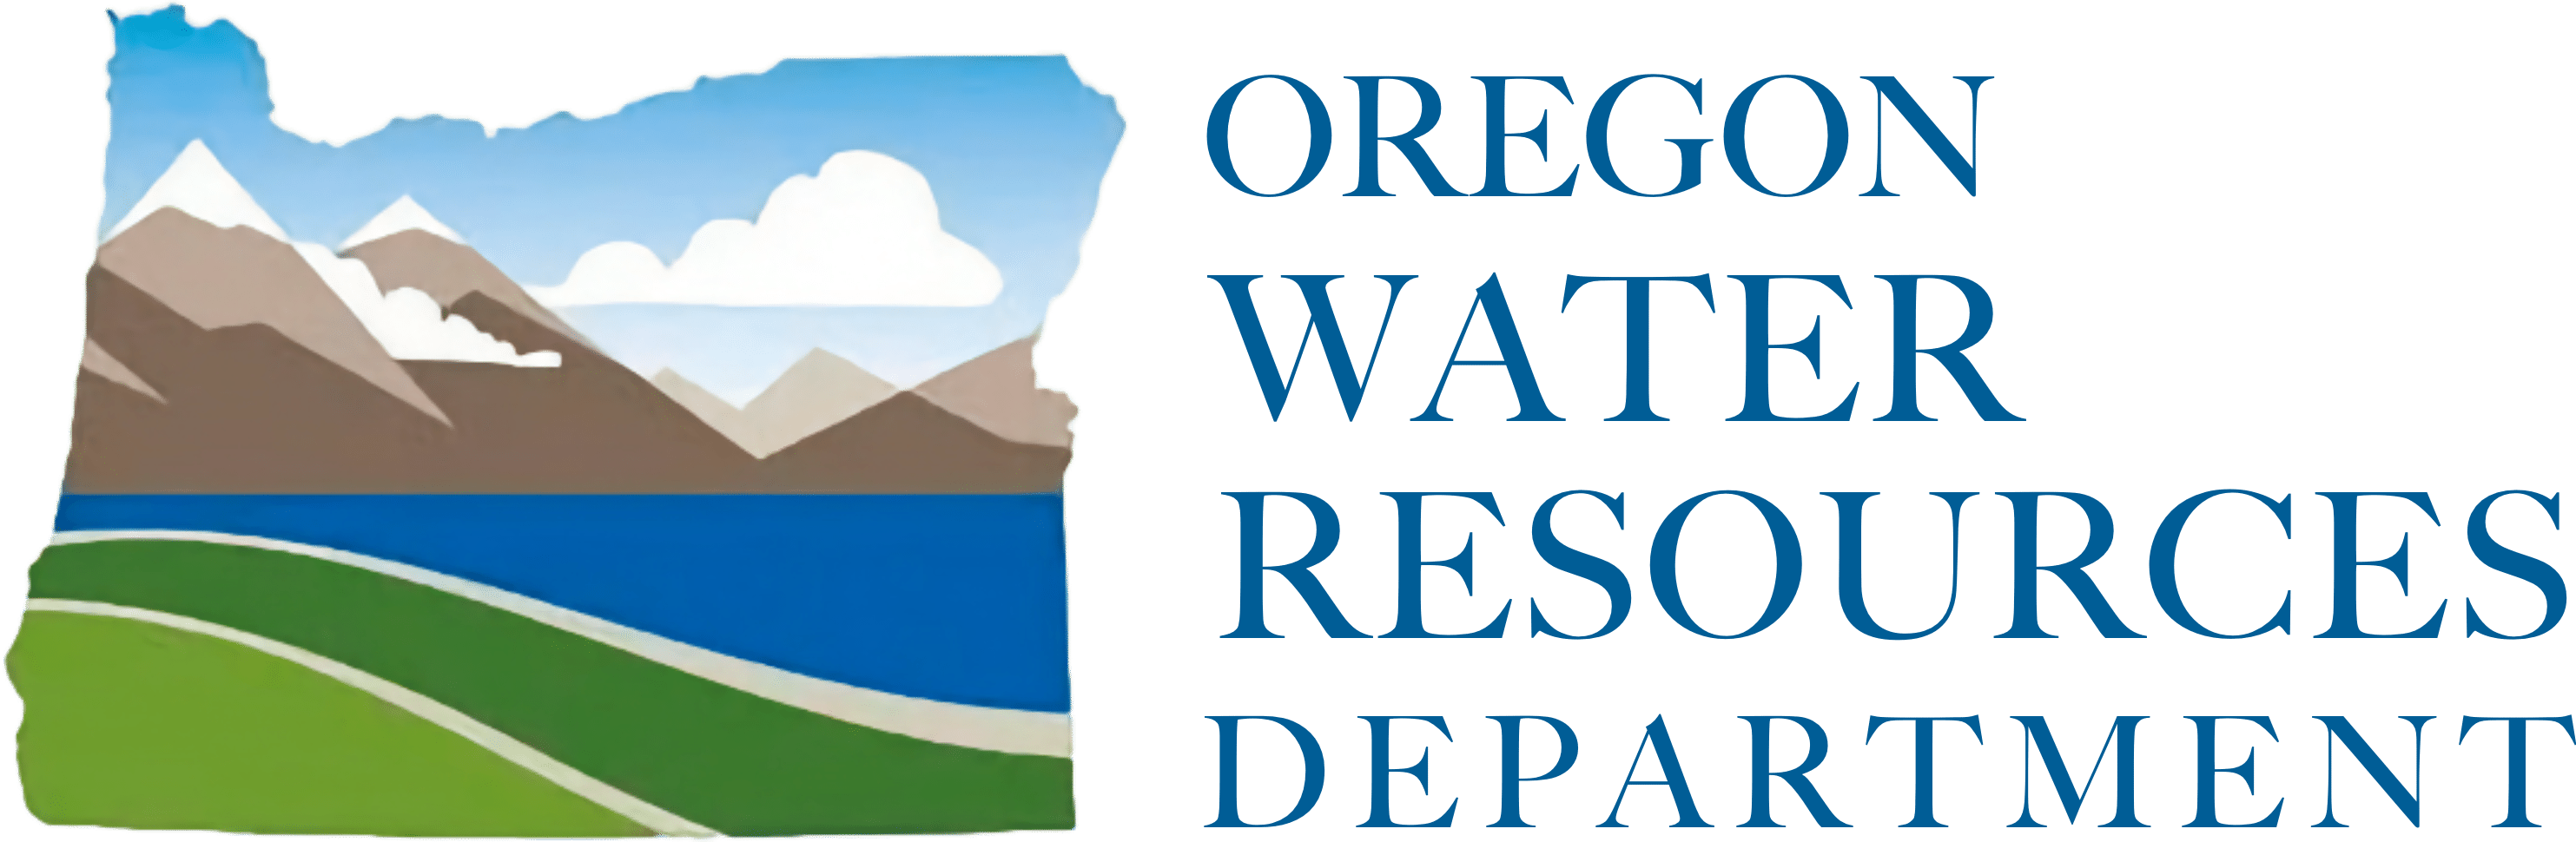 Oregon Water Resources Department Logo